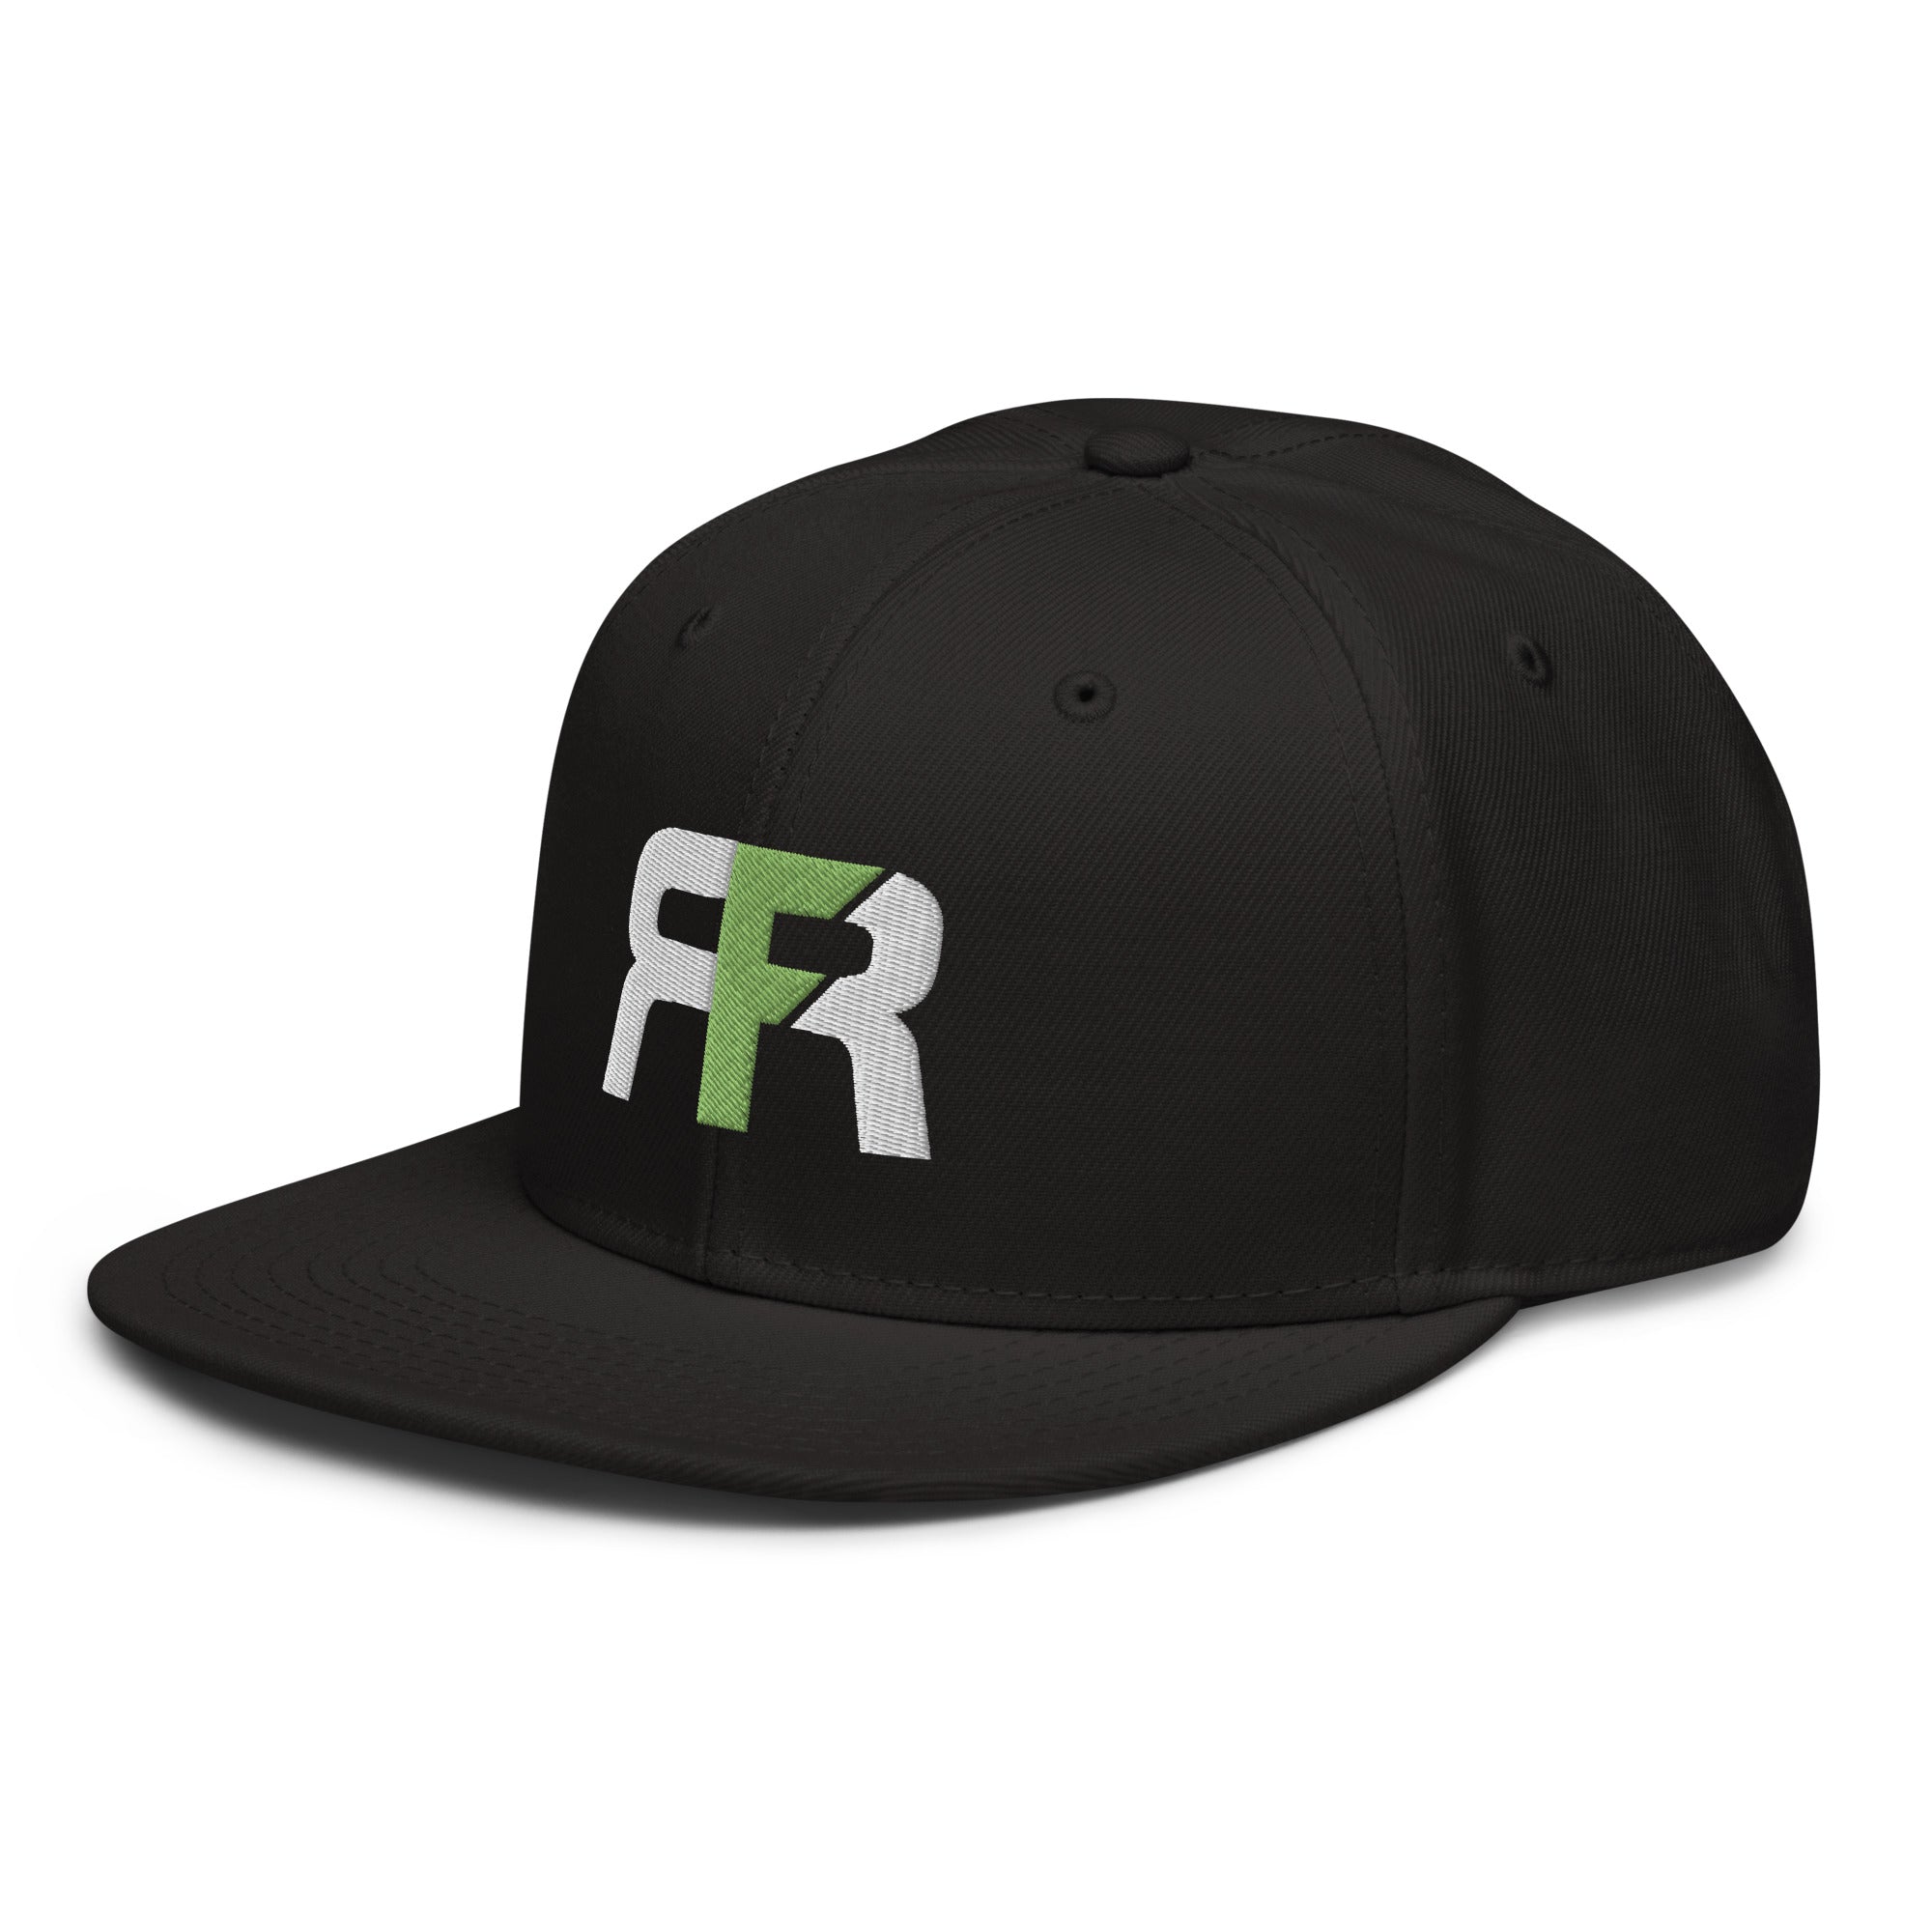 RFR (Green) Snapback Hat